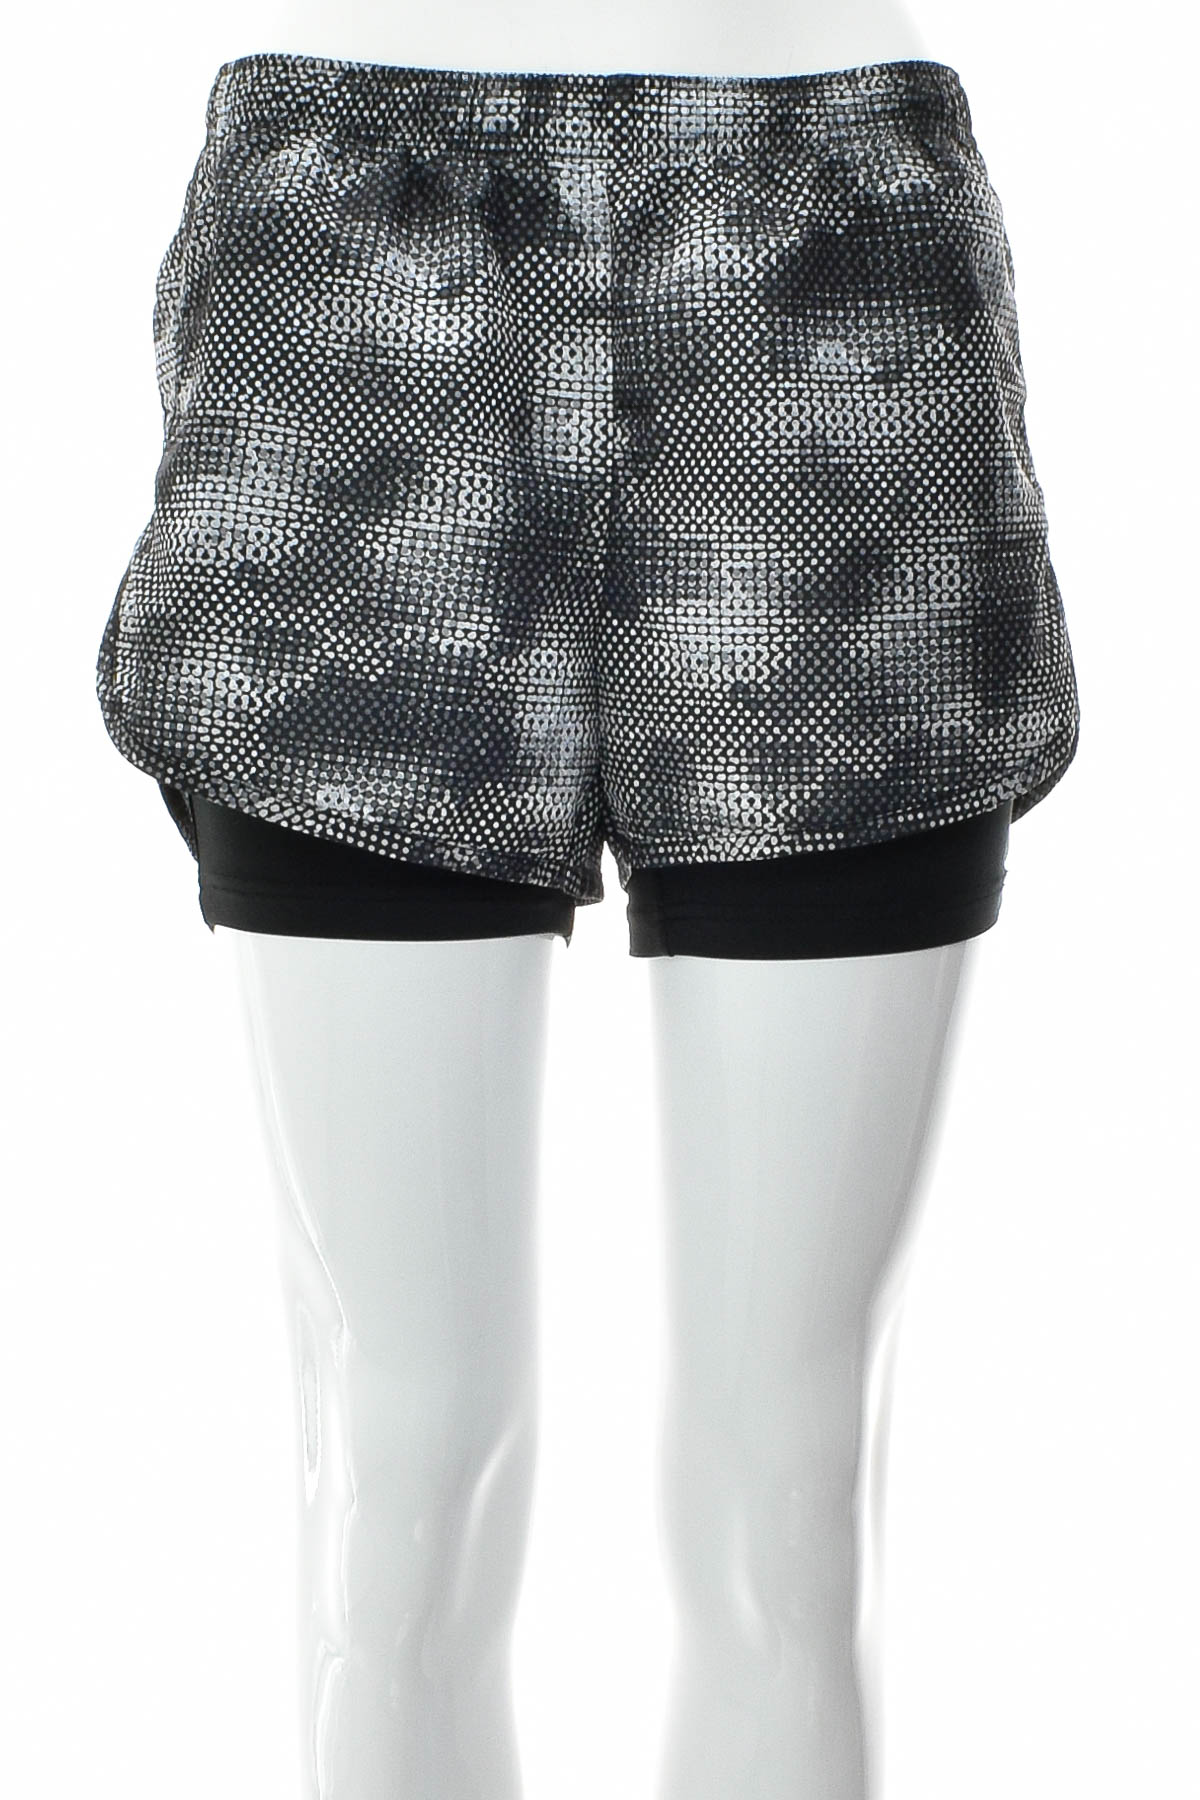 Women's shorts - Crivit - 0